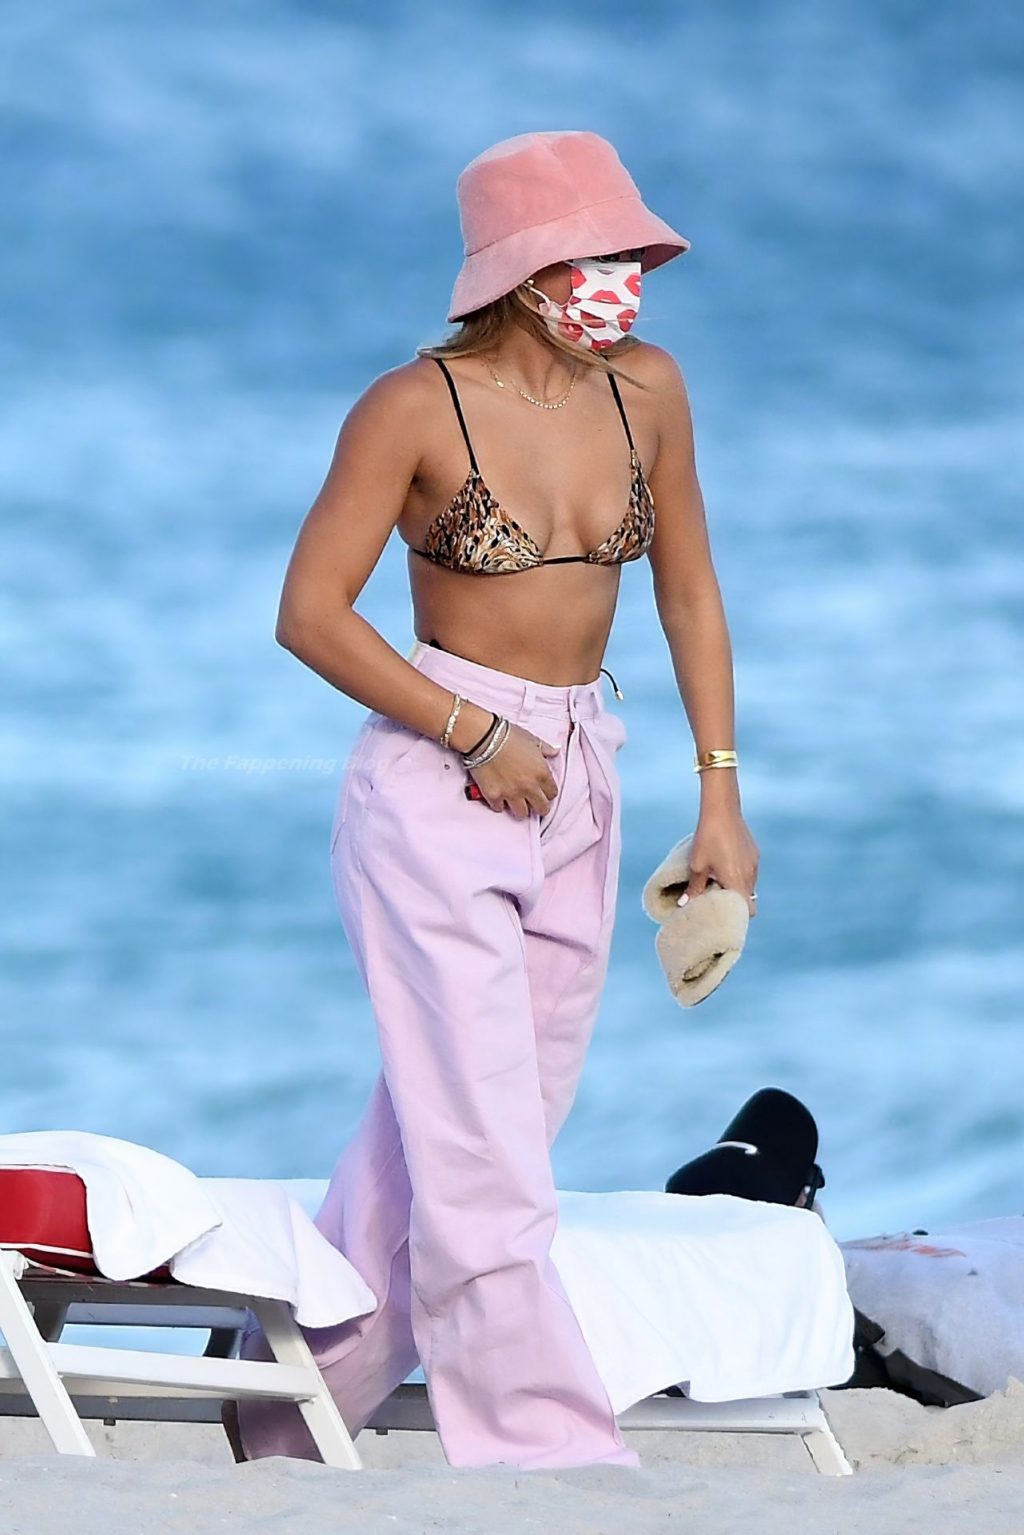 Sofia Richie Rocks a Bikini and Kisses a Mystery Man on the Beach in Miami (82 Photos)